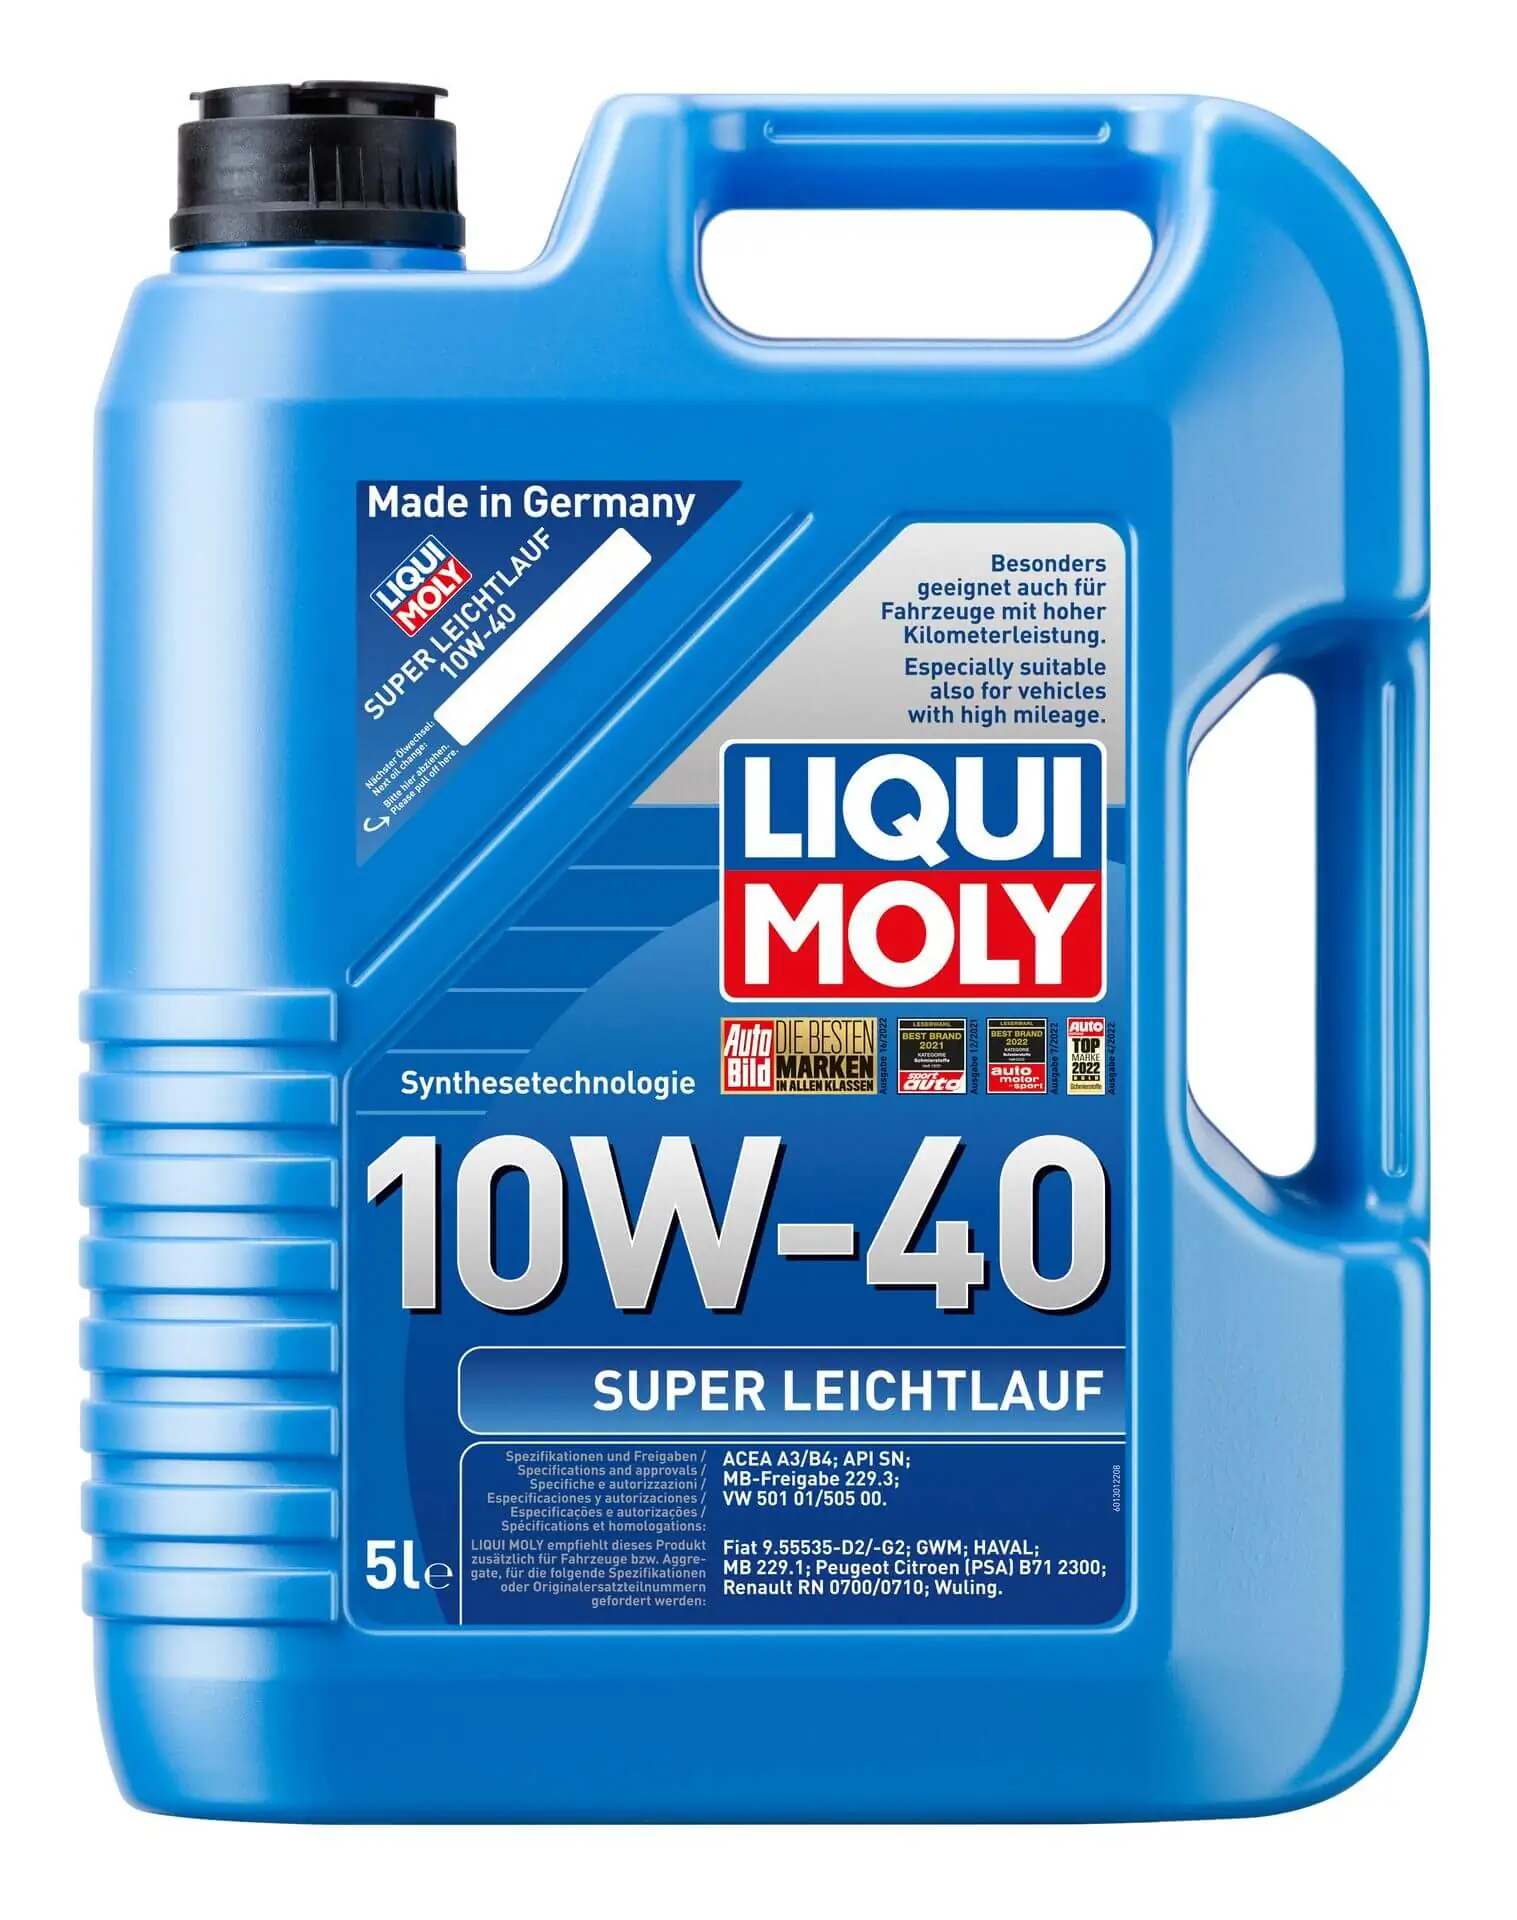 LIQUI MOLY SUPER LEICHTLAUF 10W-40 5L LIQUI MOLY